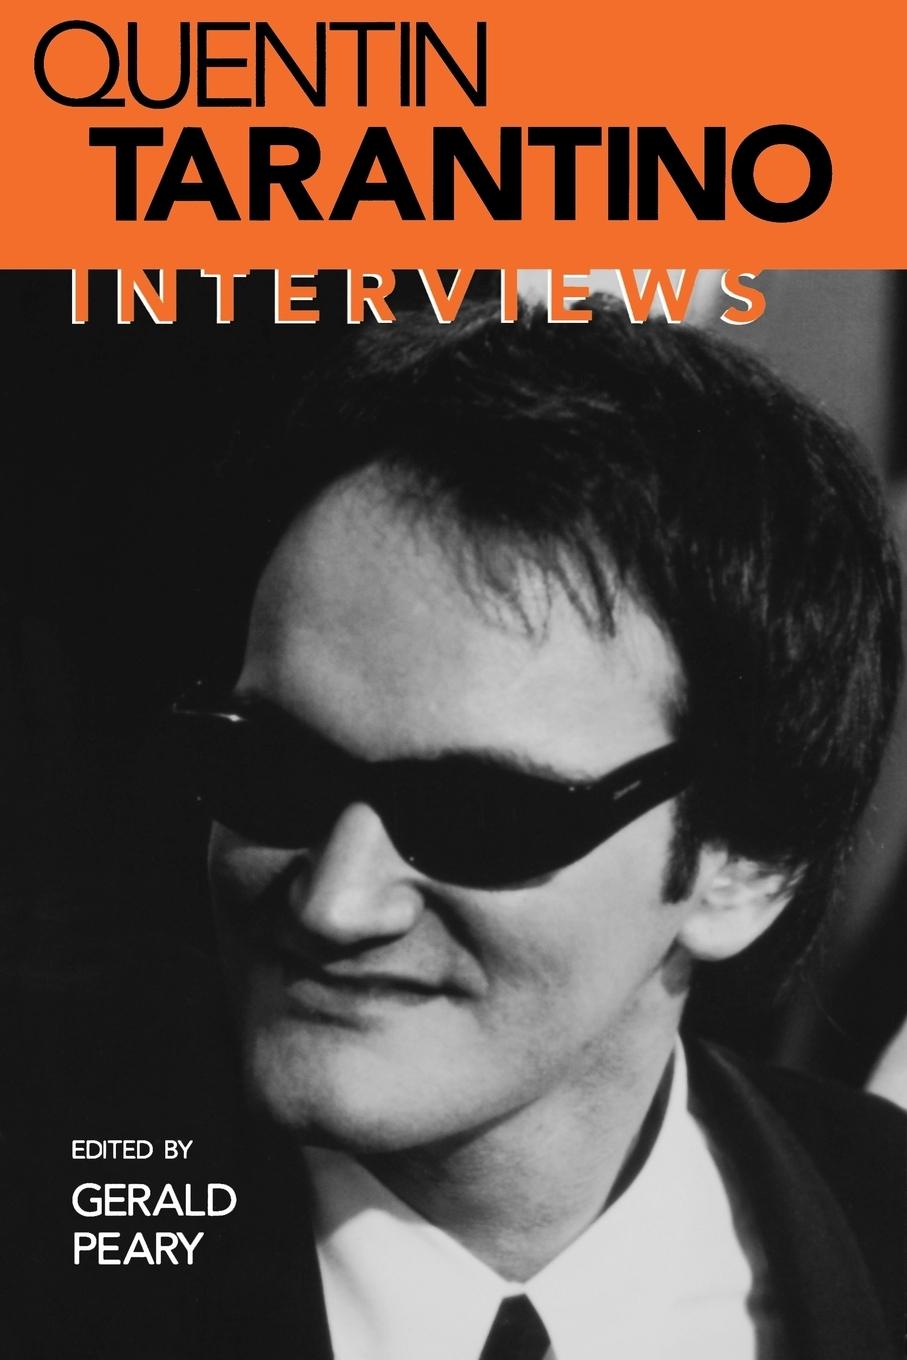 Quentin Tarantino | Interviews | Quentin Tarantino | Taschenbuch | Paperback | Englisch | 1998 | University Press of Mississippi | EAN 9781578060511 - Tarantino, Quentin